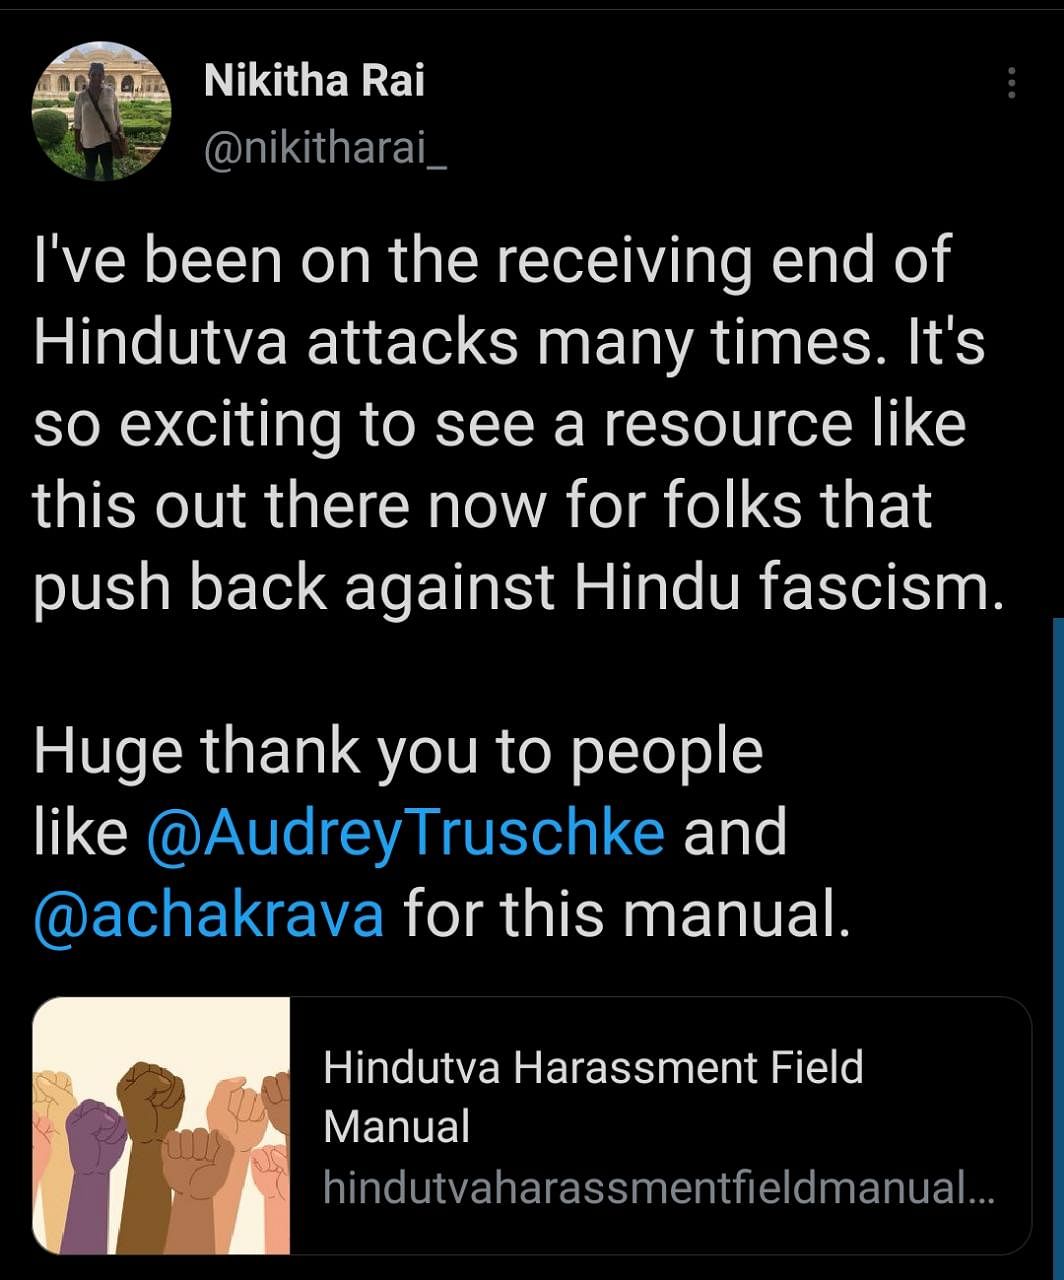 Hindutva vs Academia: Why Scholars Built a Manual to Fight Harassment 